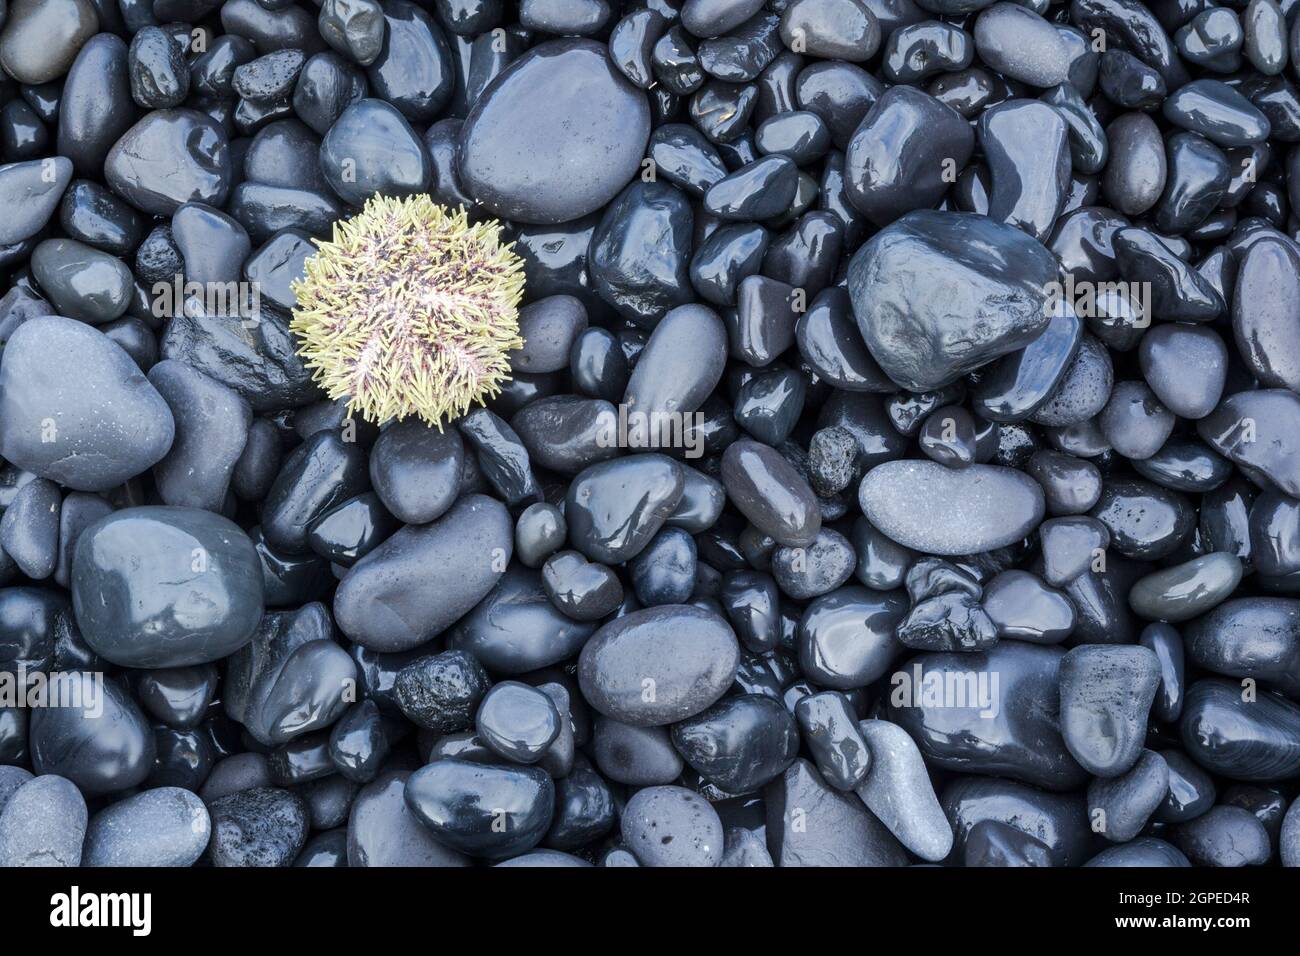 Sea Urchin, Stronglylocentrotus droebachiensis, on wet stones Stock Photo